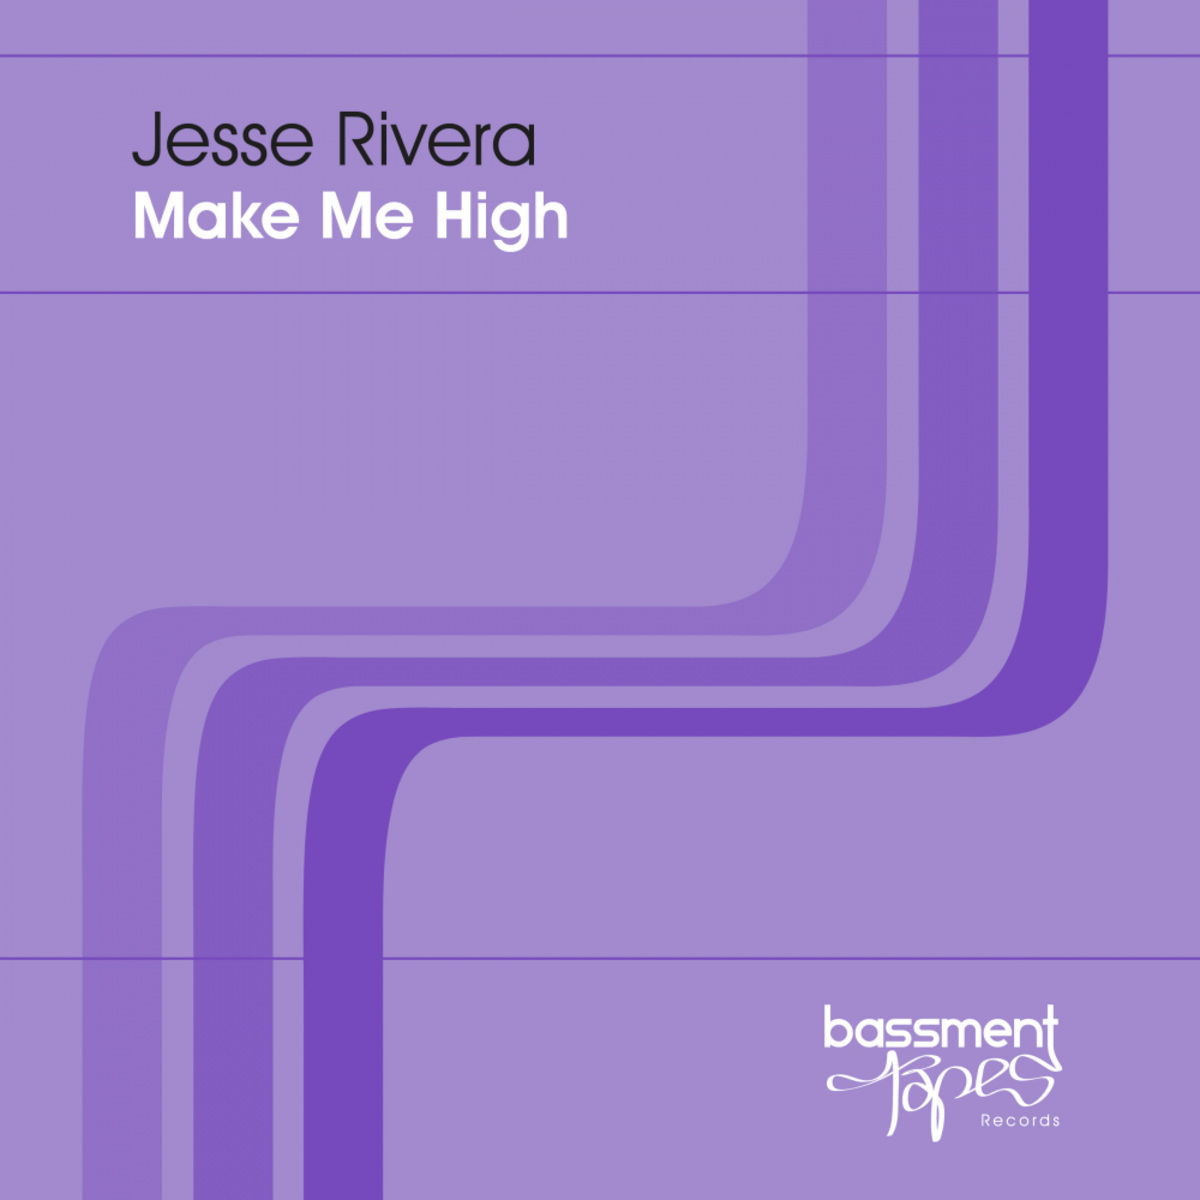 Jesse Rivera - Make Me High / Bassment Tapes